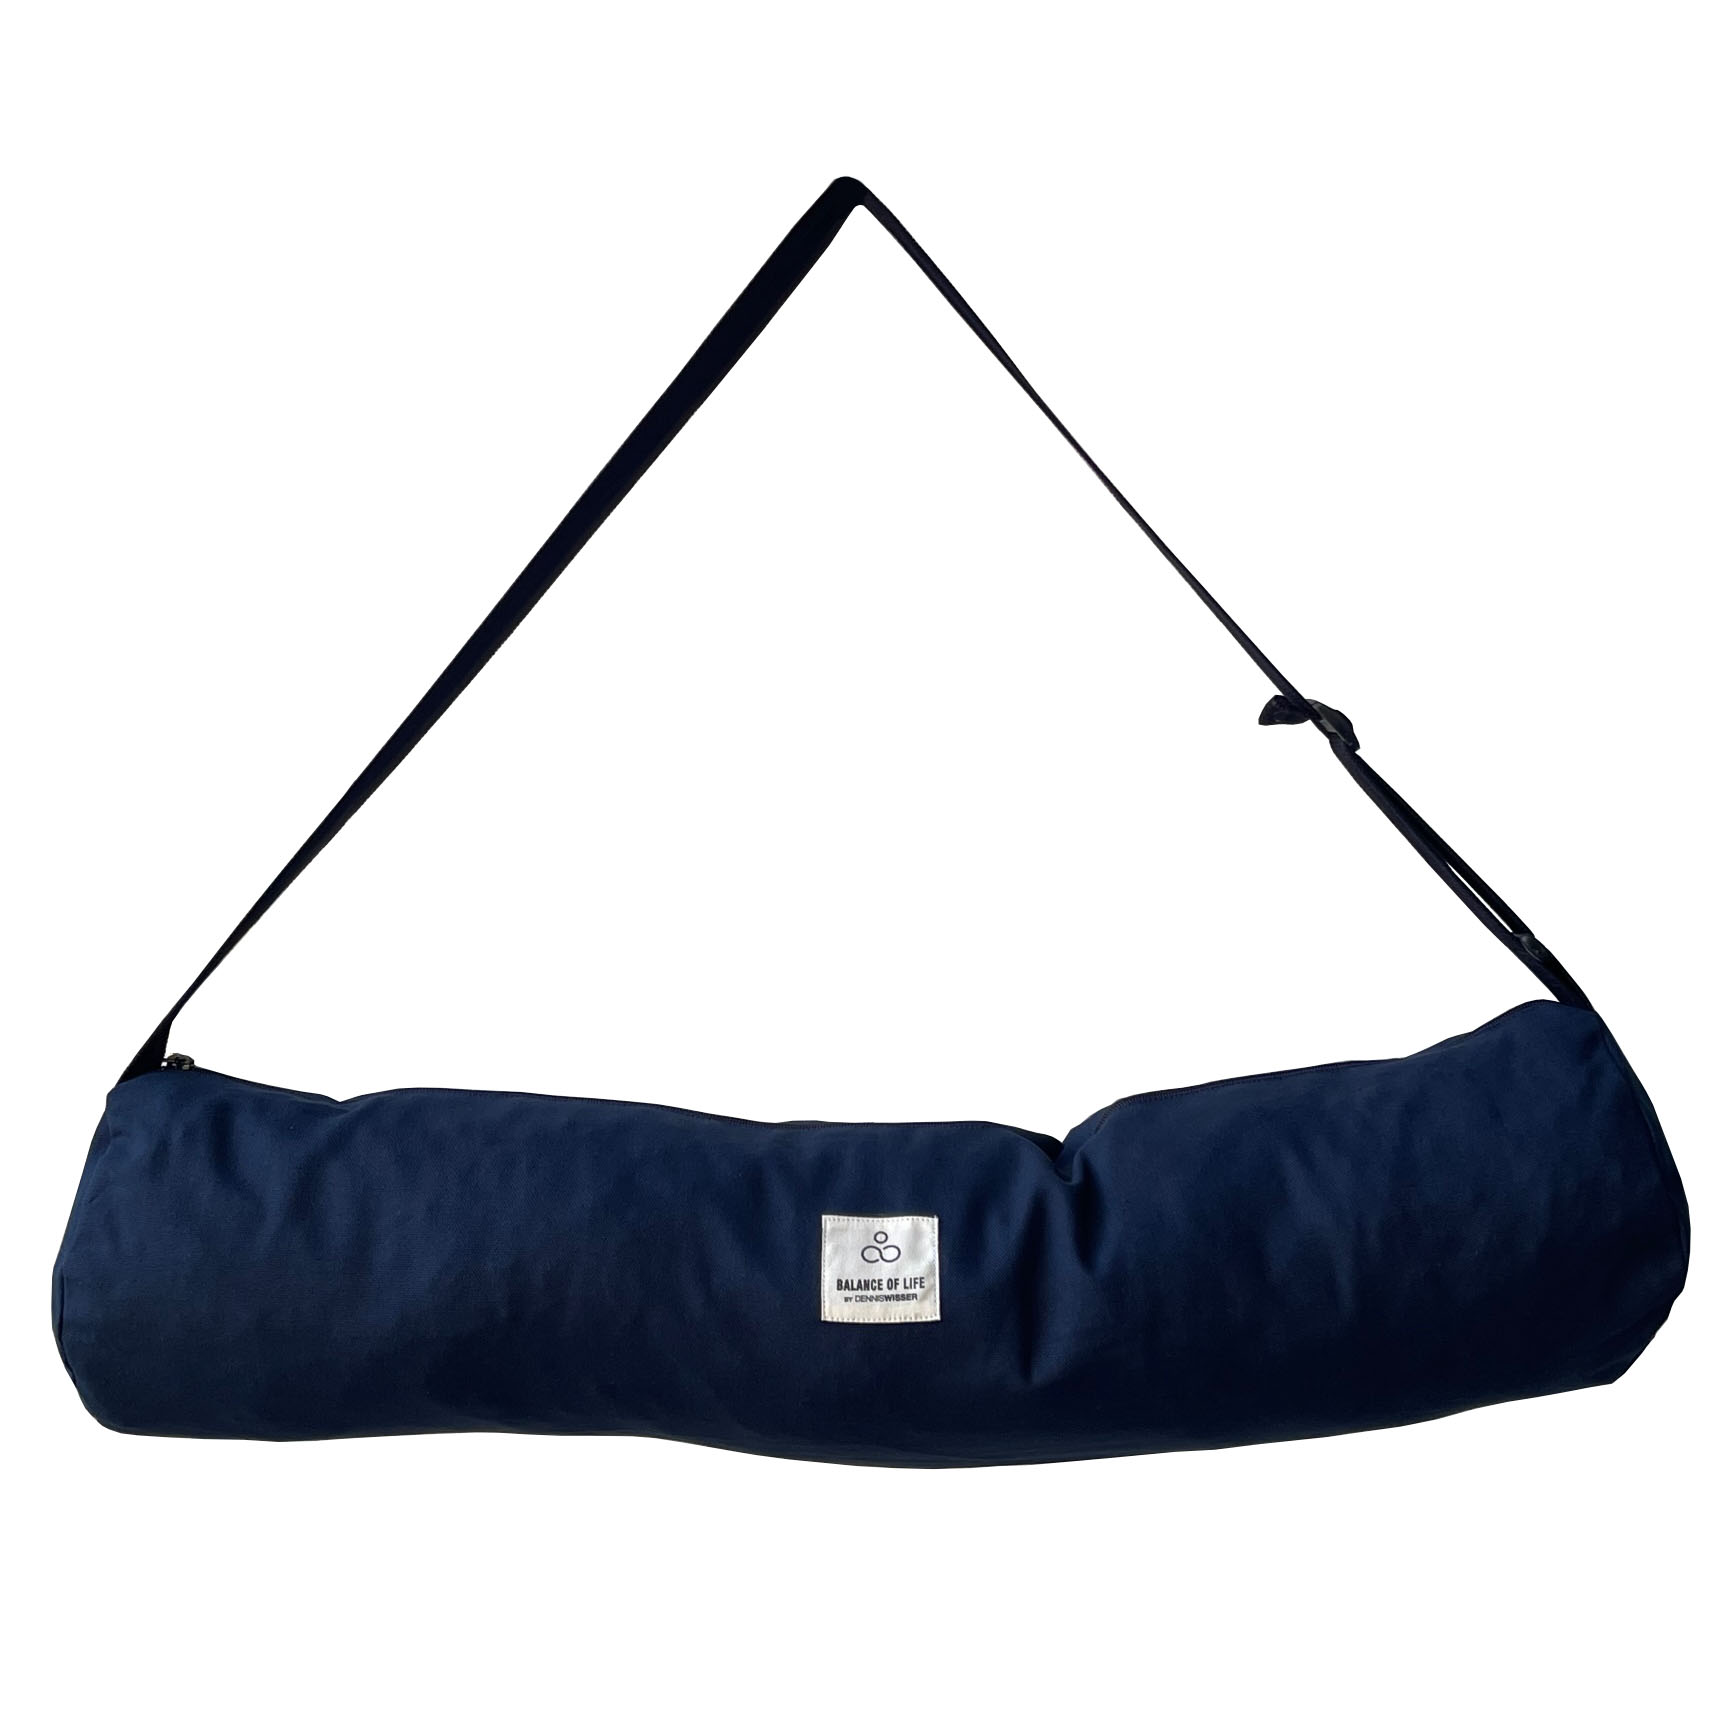 Navy blue canvas yoga bag